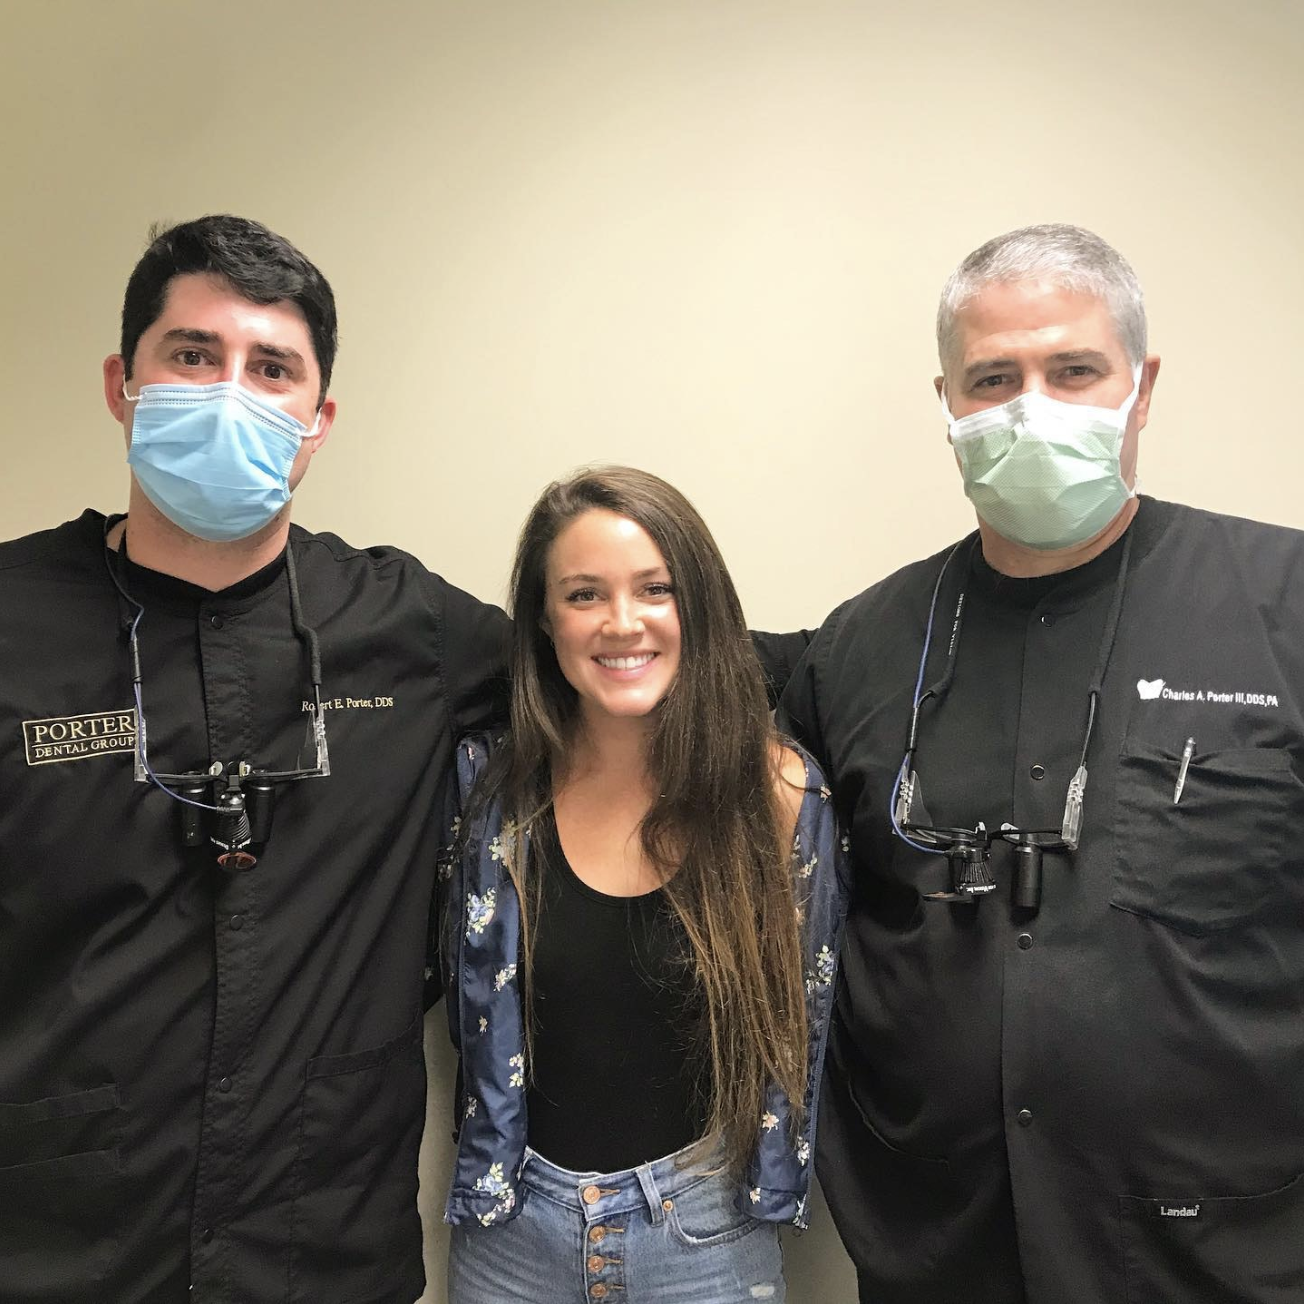 Porter Dental Group | Charlotte, NC